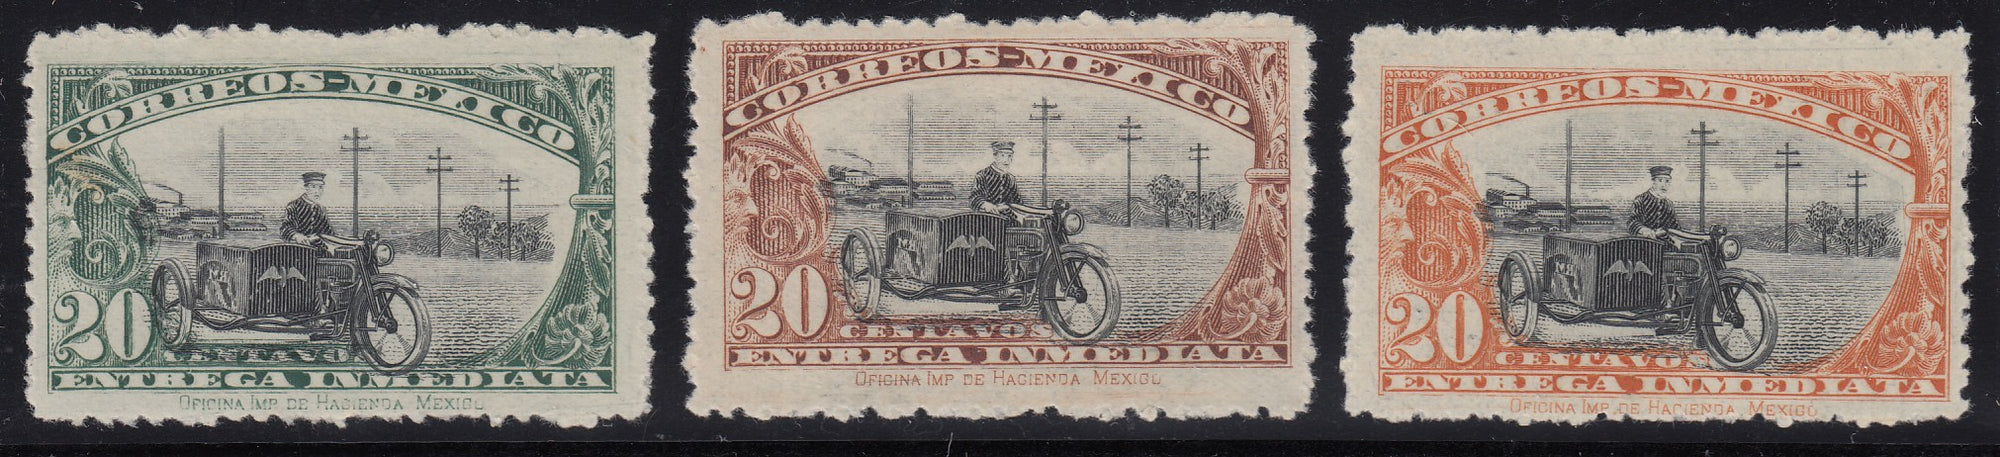 Mexico 1919 Special Delivery Color Trial Proofs x 3 M Mint. Scott E1 var